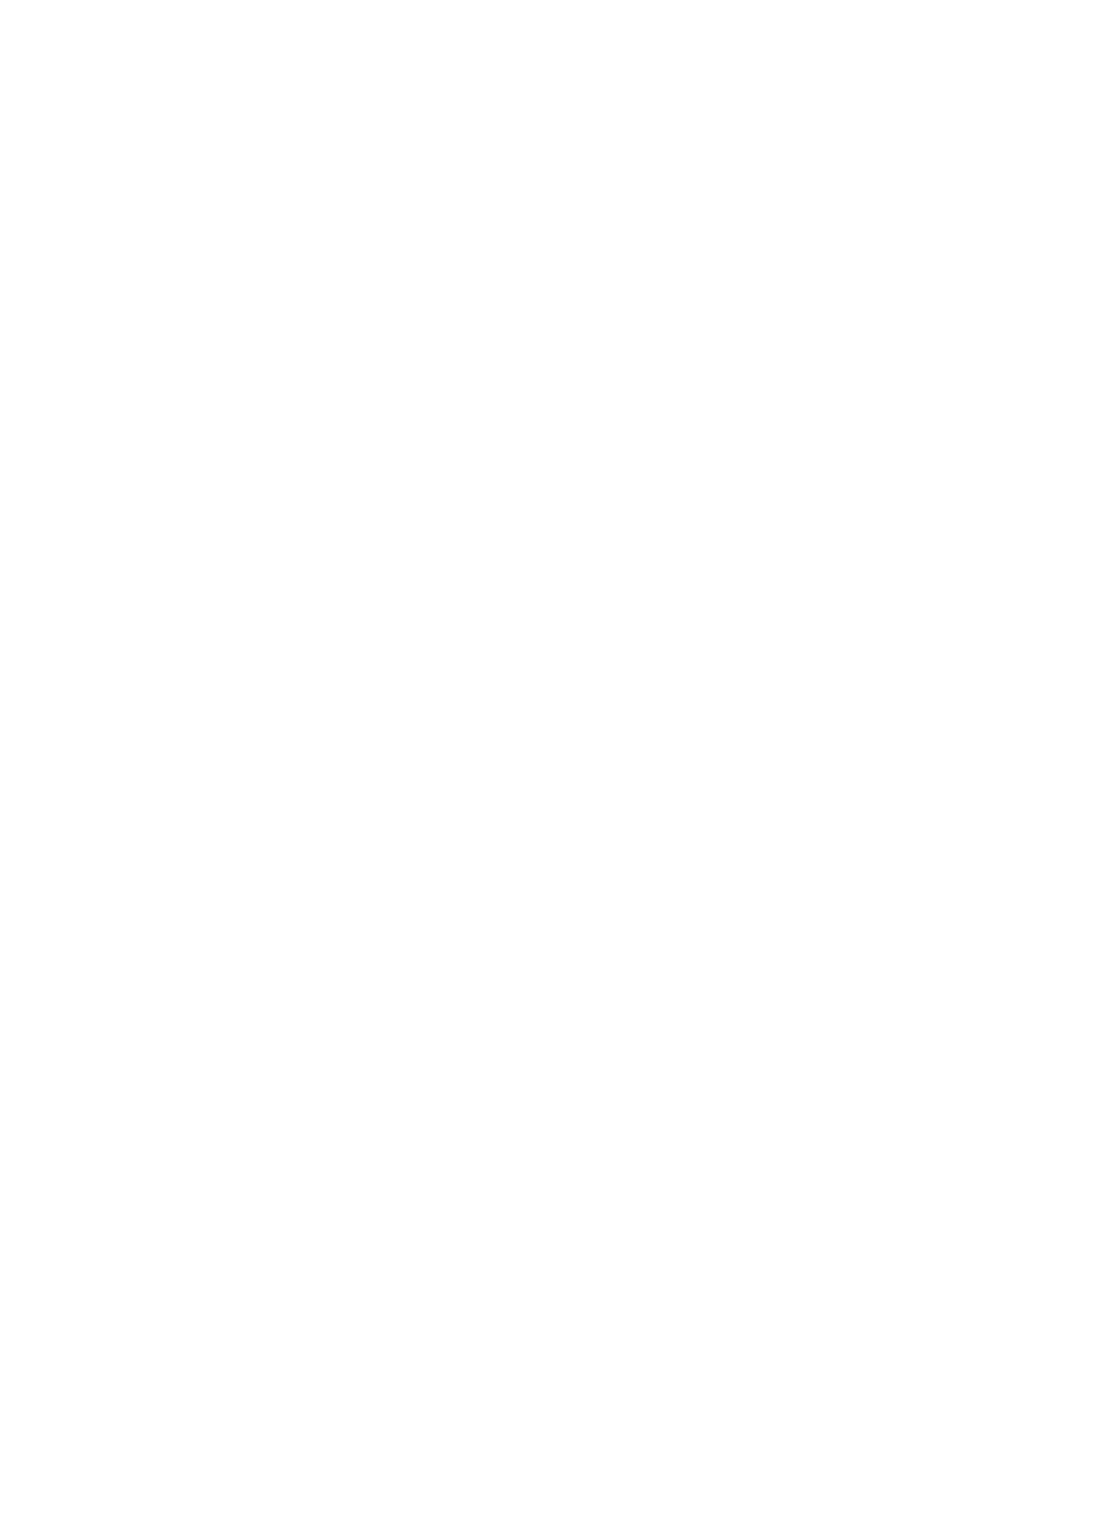 Dare Share Red Ribbon T-Shirt Say NO to Drugs Tee Red Ribbon Shirt Drug Free T-Shirt Proud to be Drug Free Shirt